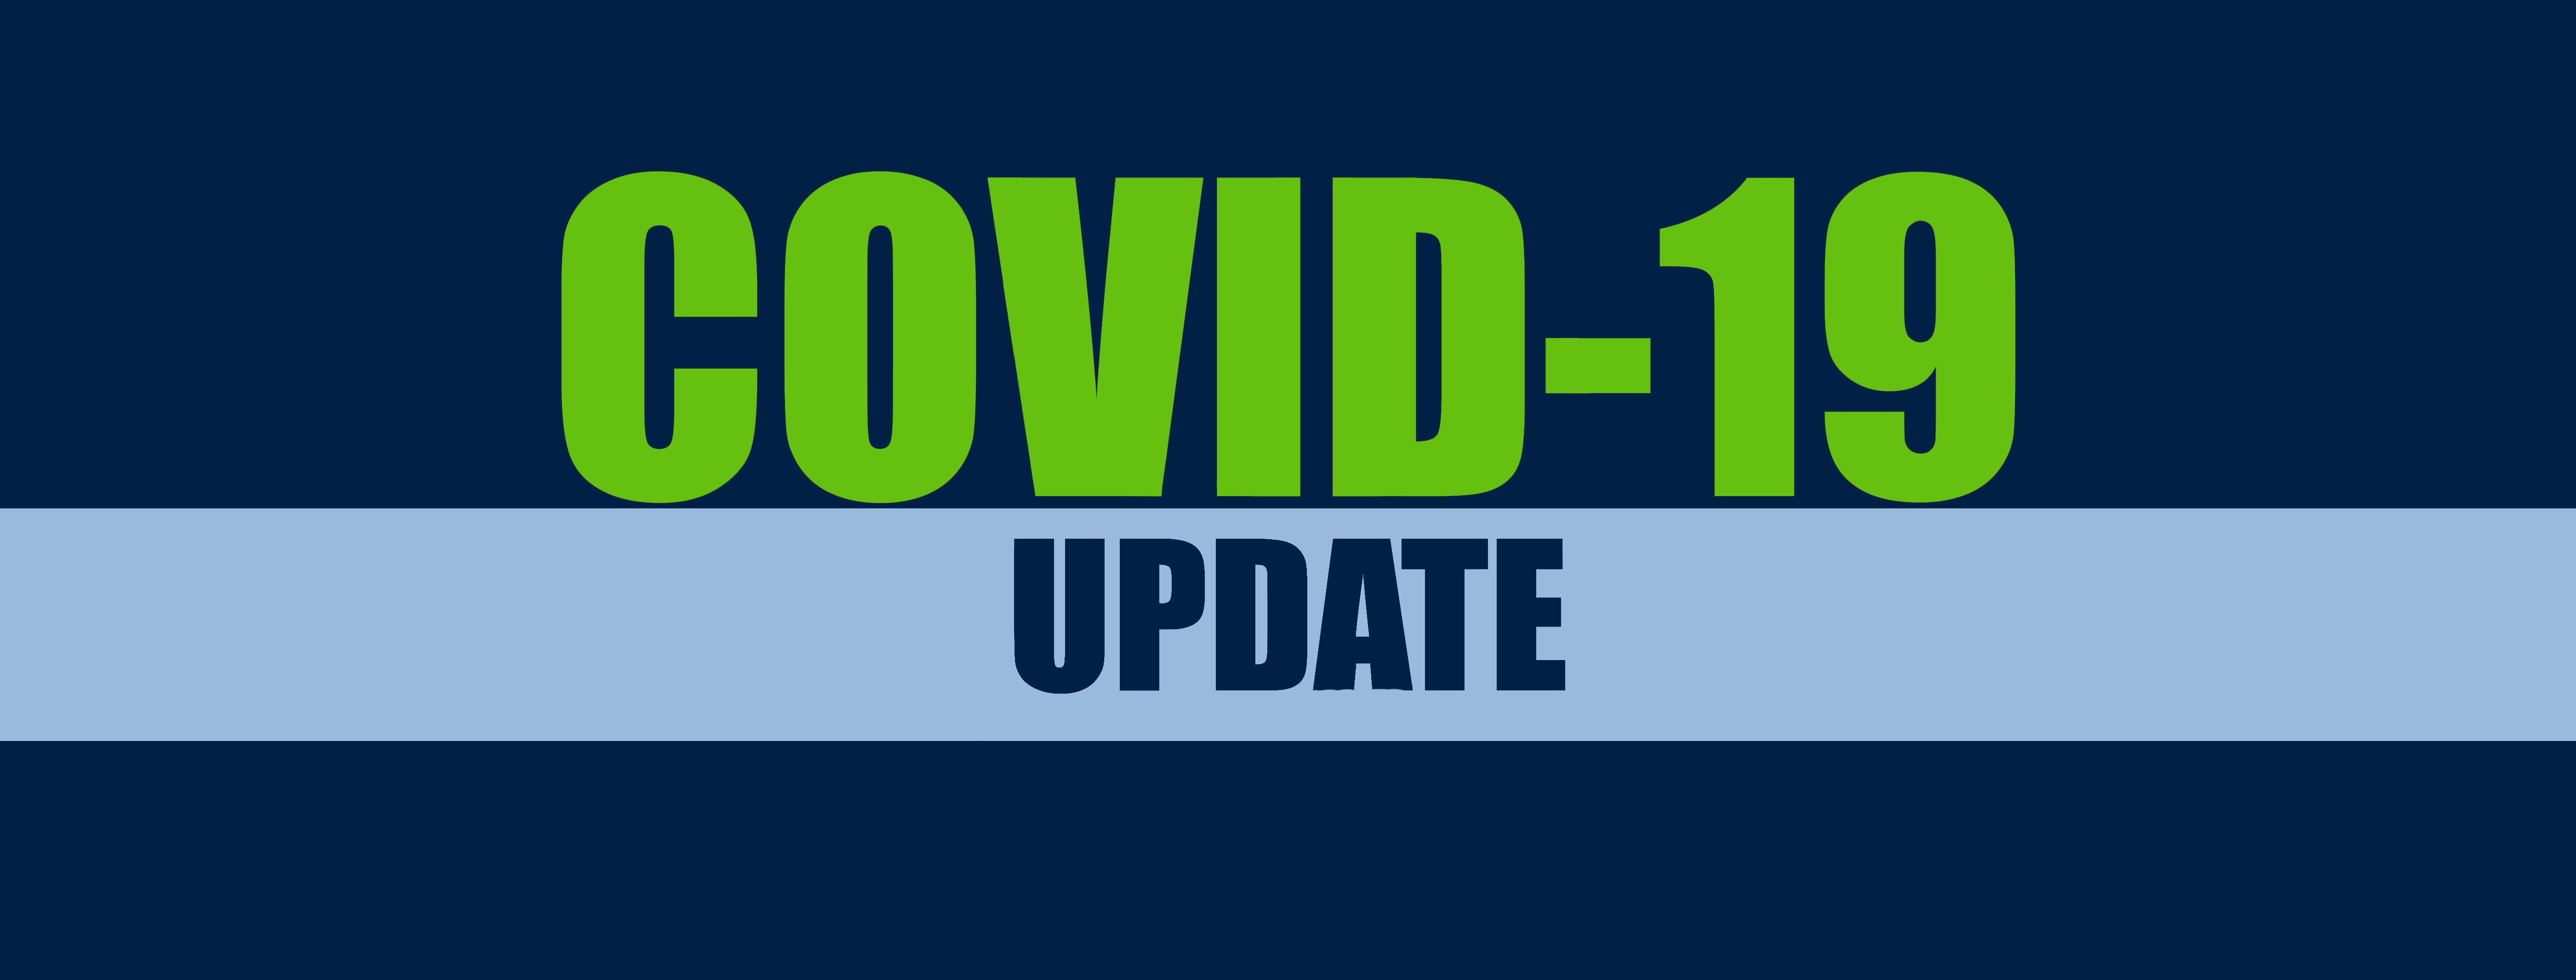 Covid-19 Response Update